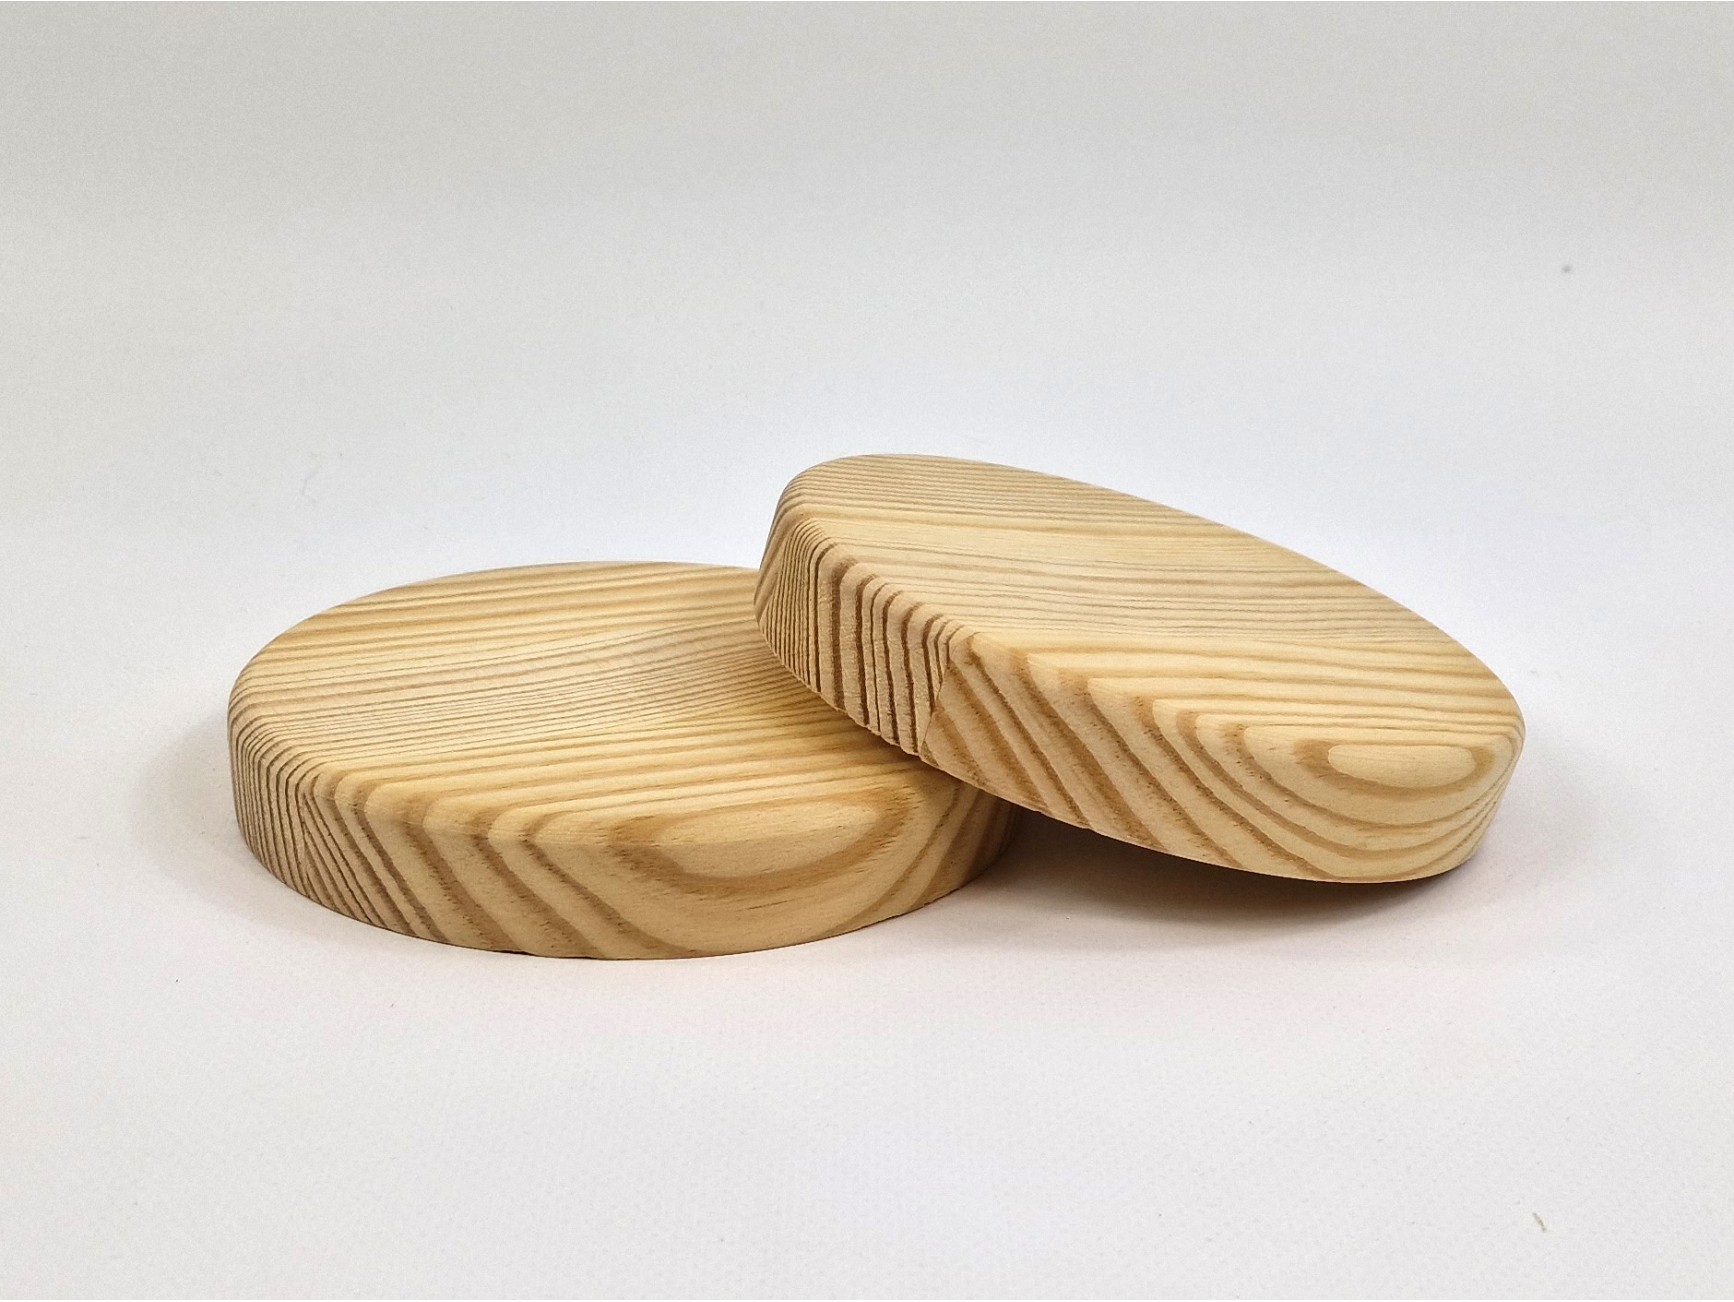 Peana ovalada de madera 22,5 x 15 cm